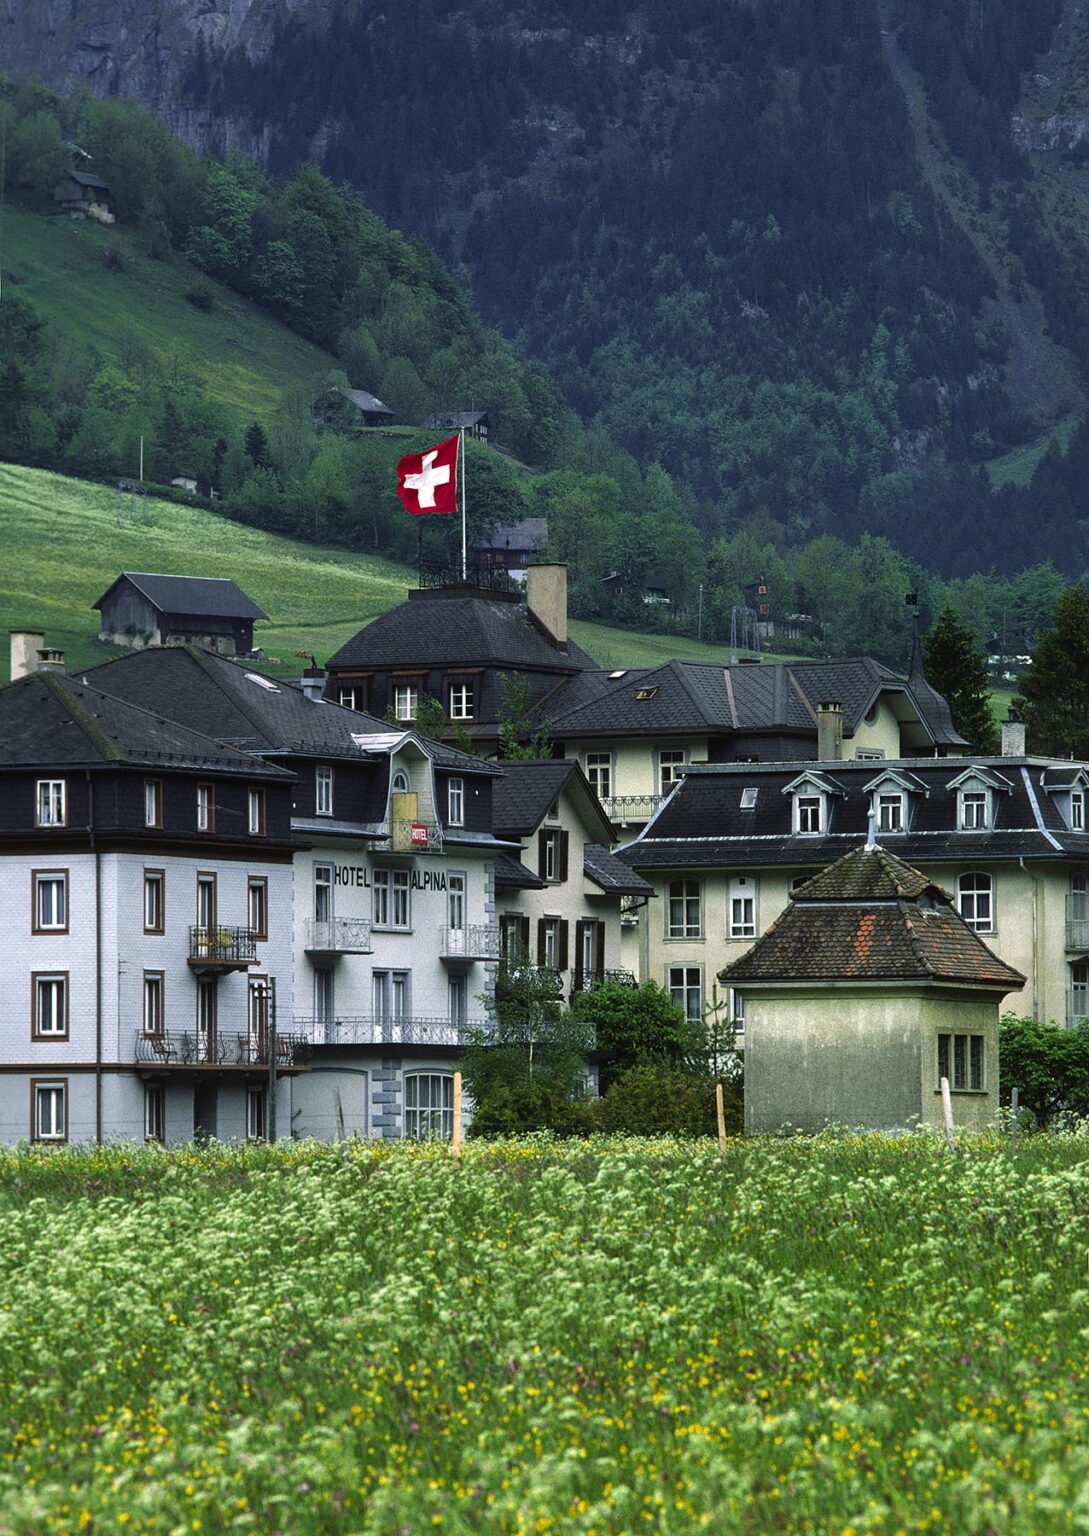 HOTEL ALPINA in the INTERLAKEN REGION of the SWISS ALPS -  SWITZERLAND